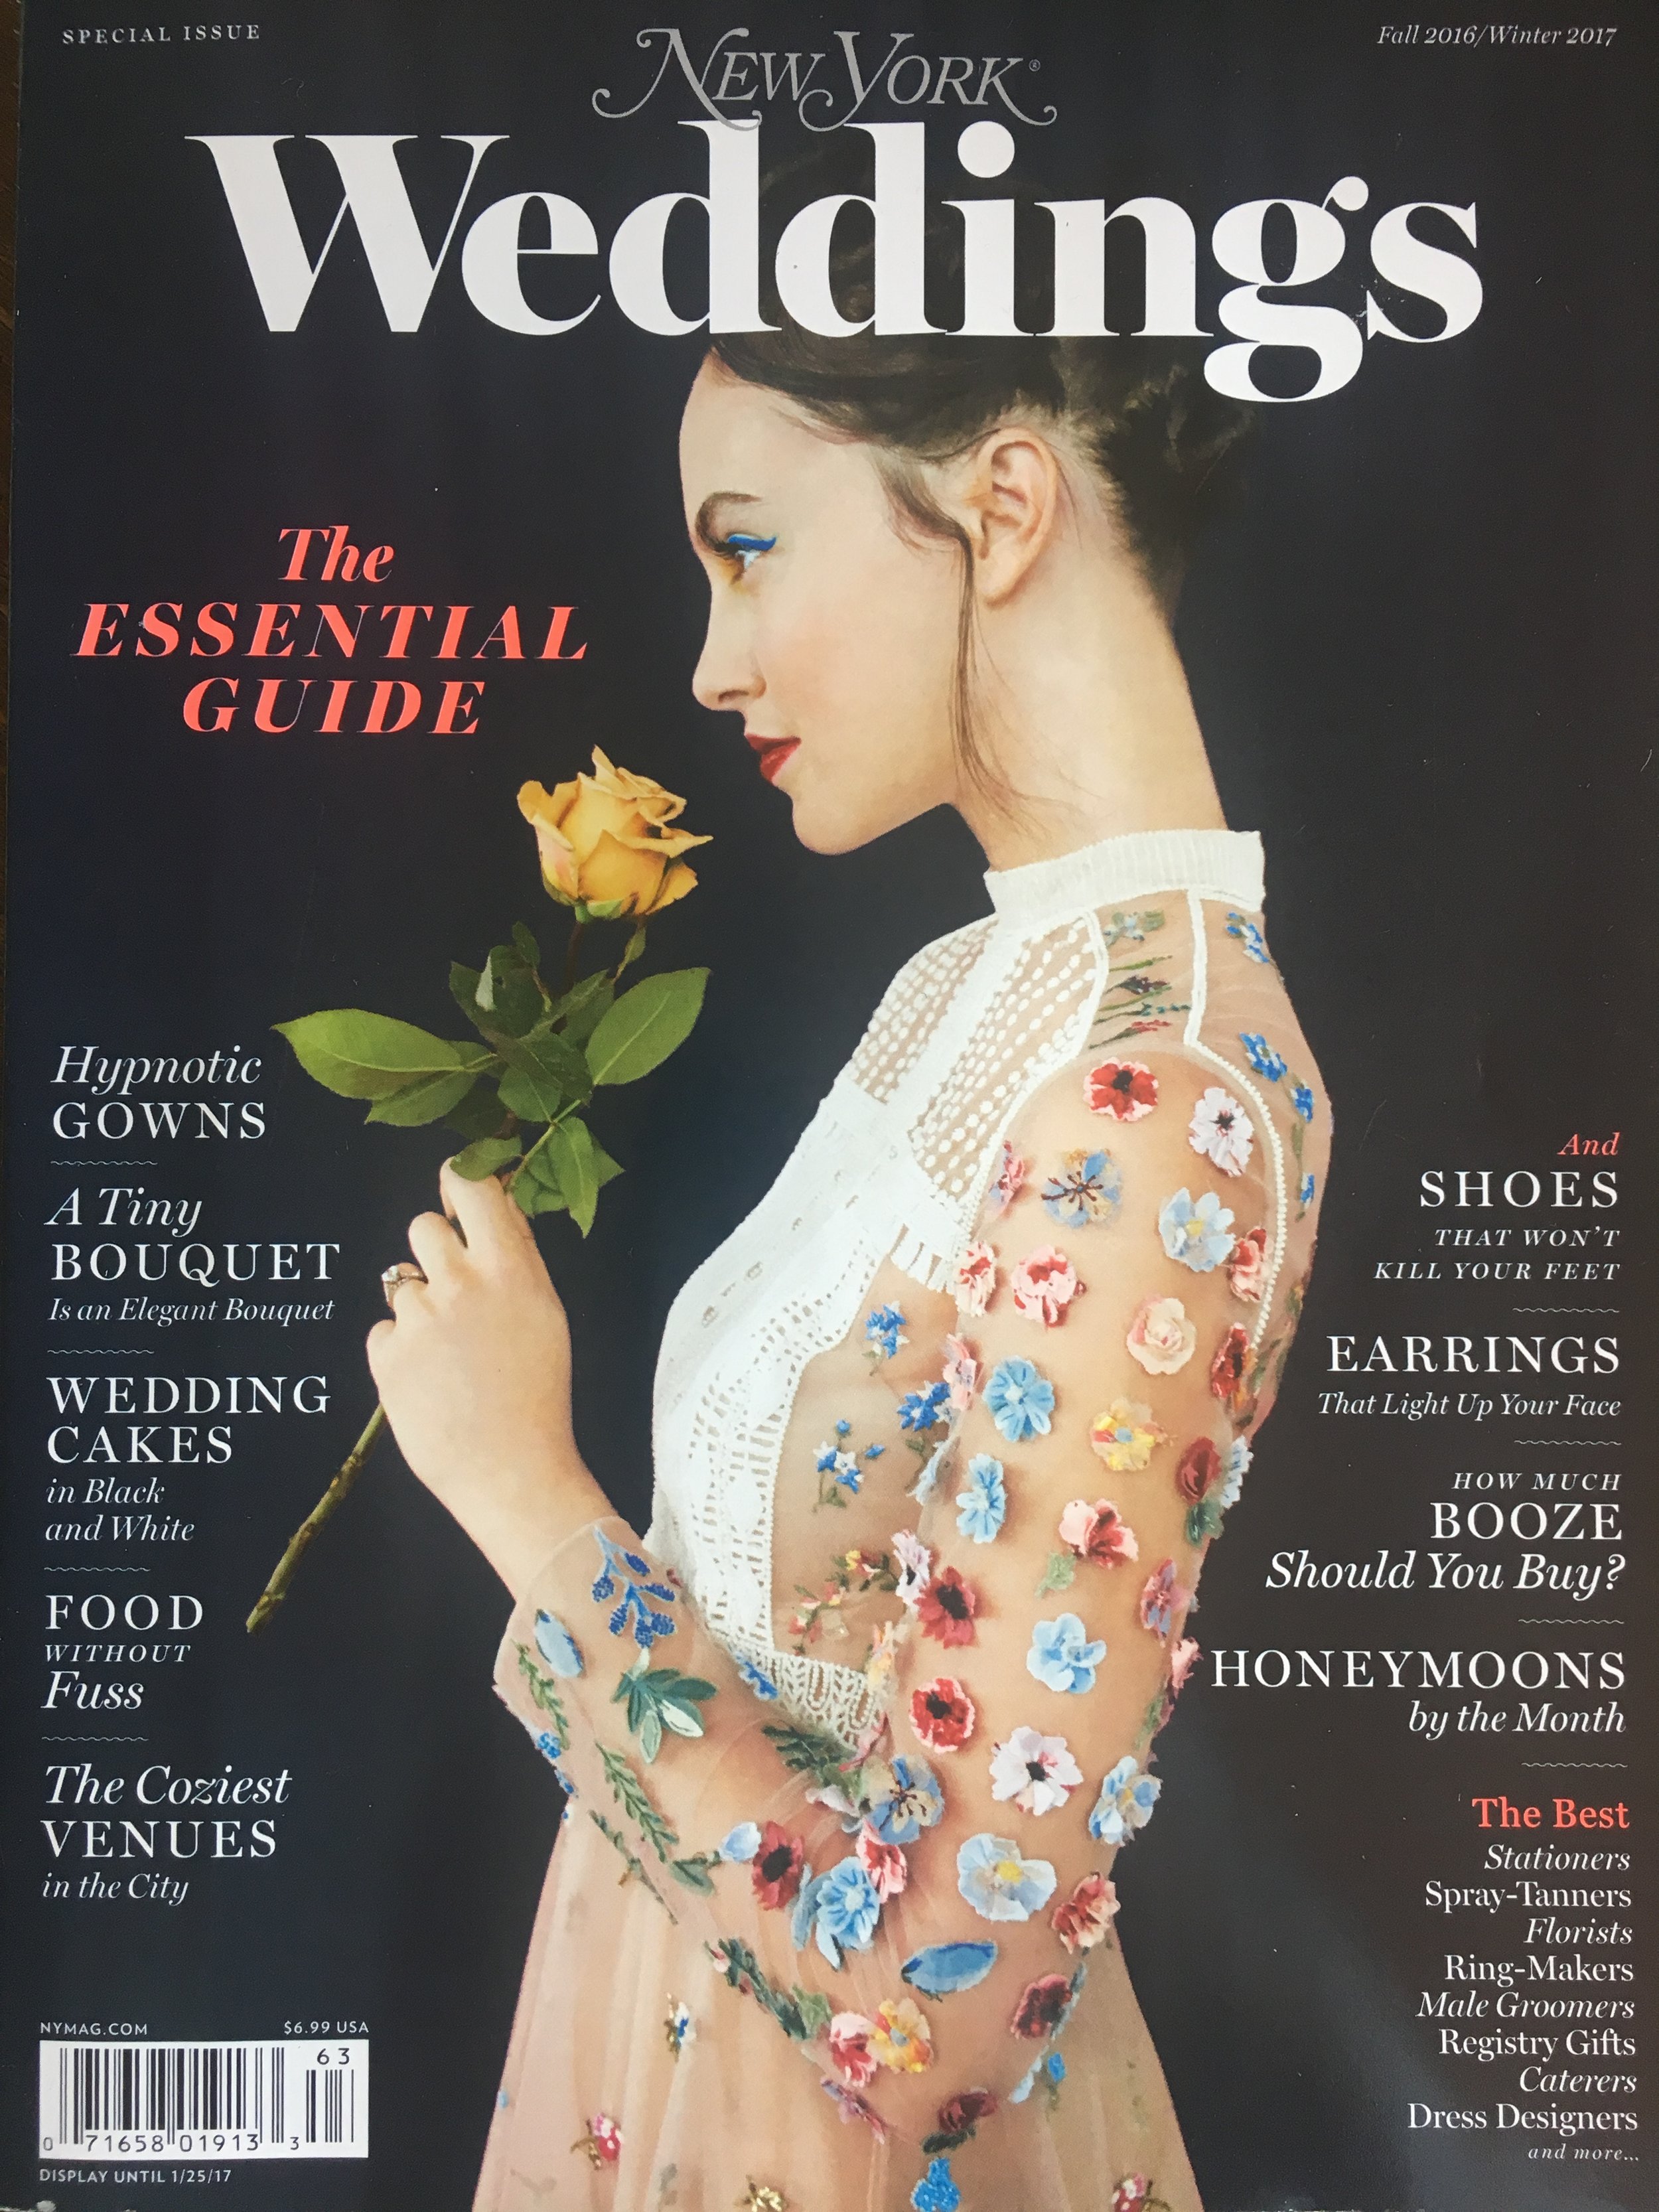 New York Magazine Weddings Fall Winter 2016 Cover.JPG